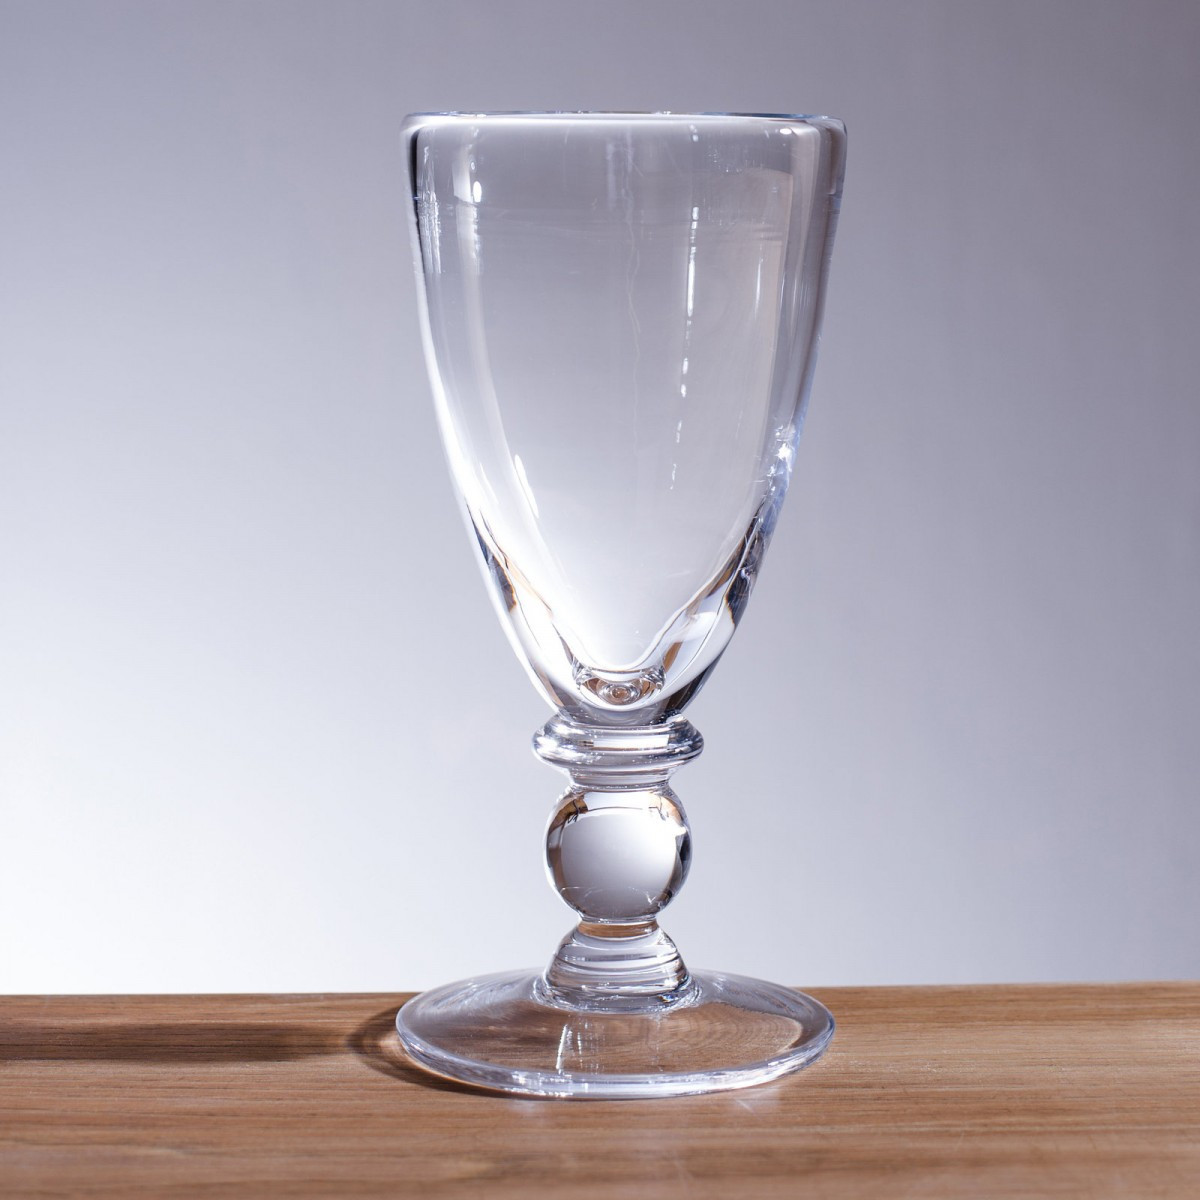 20 Wonderful Simon Pearce Bud Vase 2024 free download simon pearce bud vase of simon pearce glassware dinnerware with hartland goblet by simon pearce